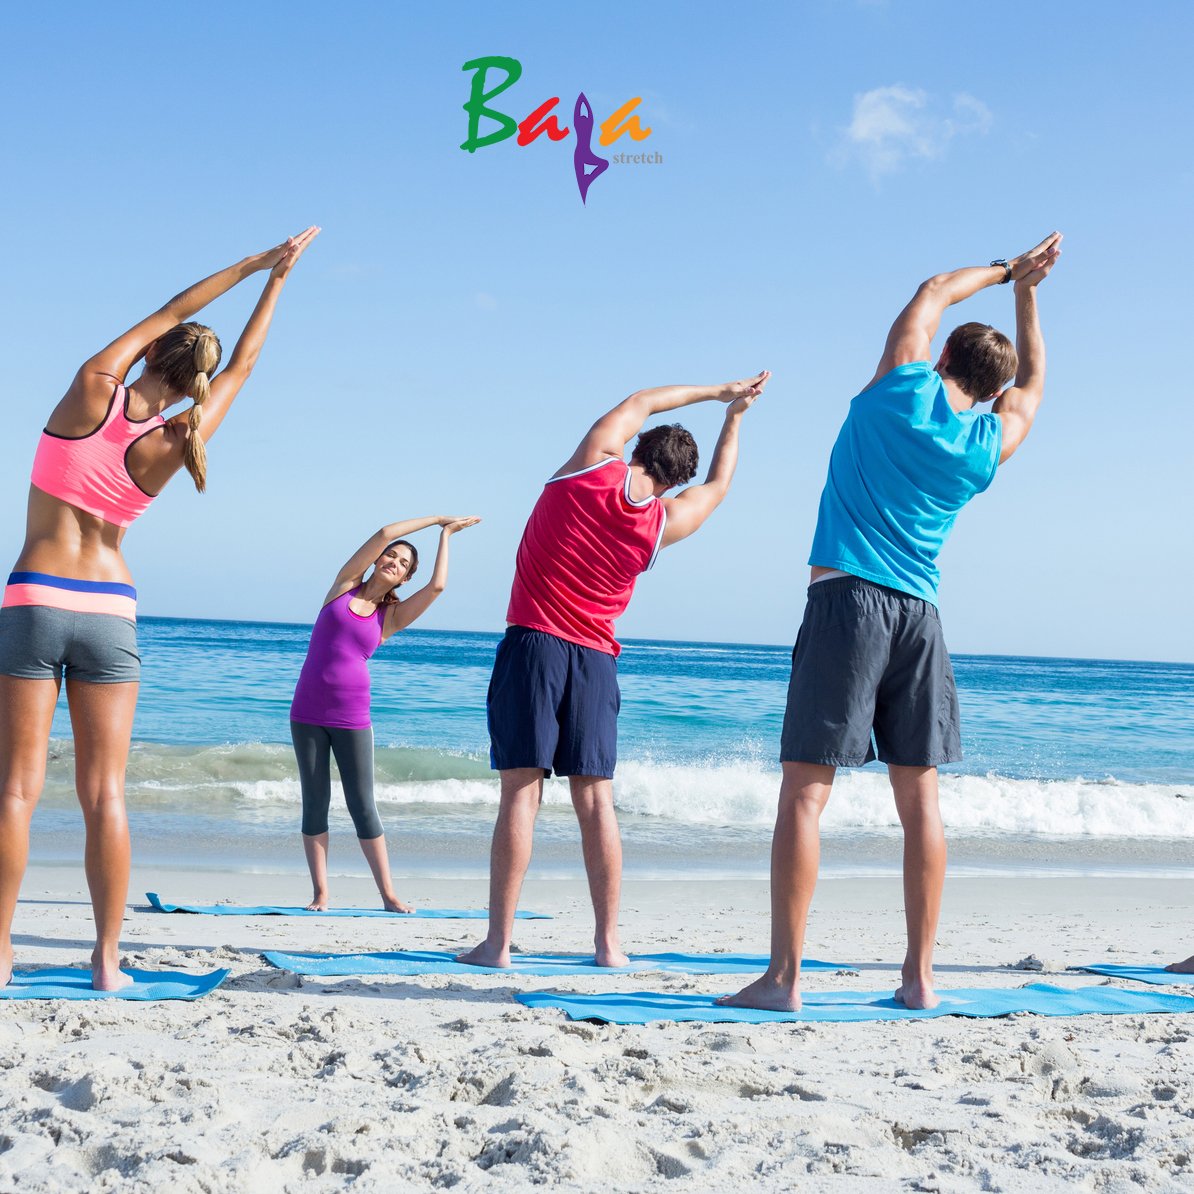 Beachgoers and yogis alike describe their favorite pastimes and soothing and relaxing. 
#yoga #breathe #transformation #practice #yogapants #yogalife #transformation #energize #yogainspo #yogaeverydamnday #sandiegoyoga #yogainspo #beachyoga #gypsyyoga #bajayoga